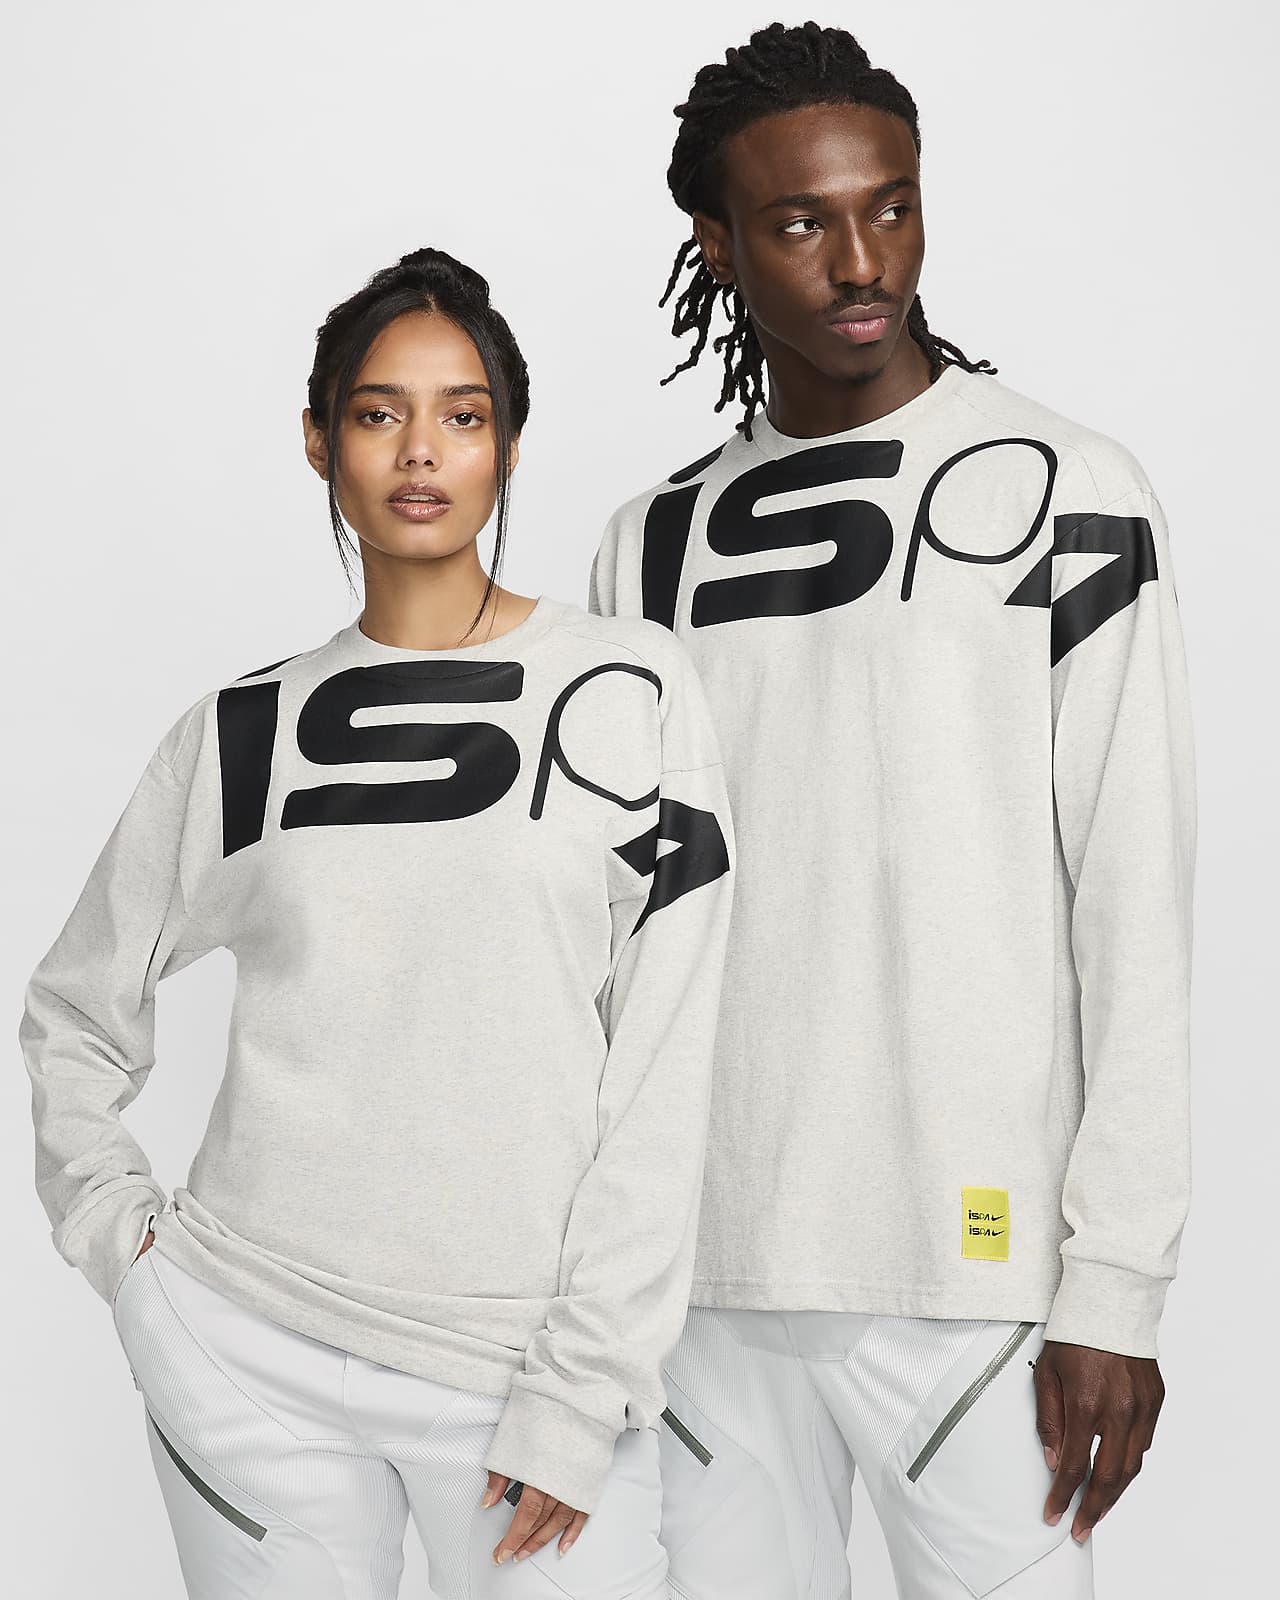 Nike ISPA Long-Sleeved Top